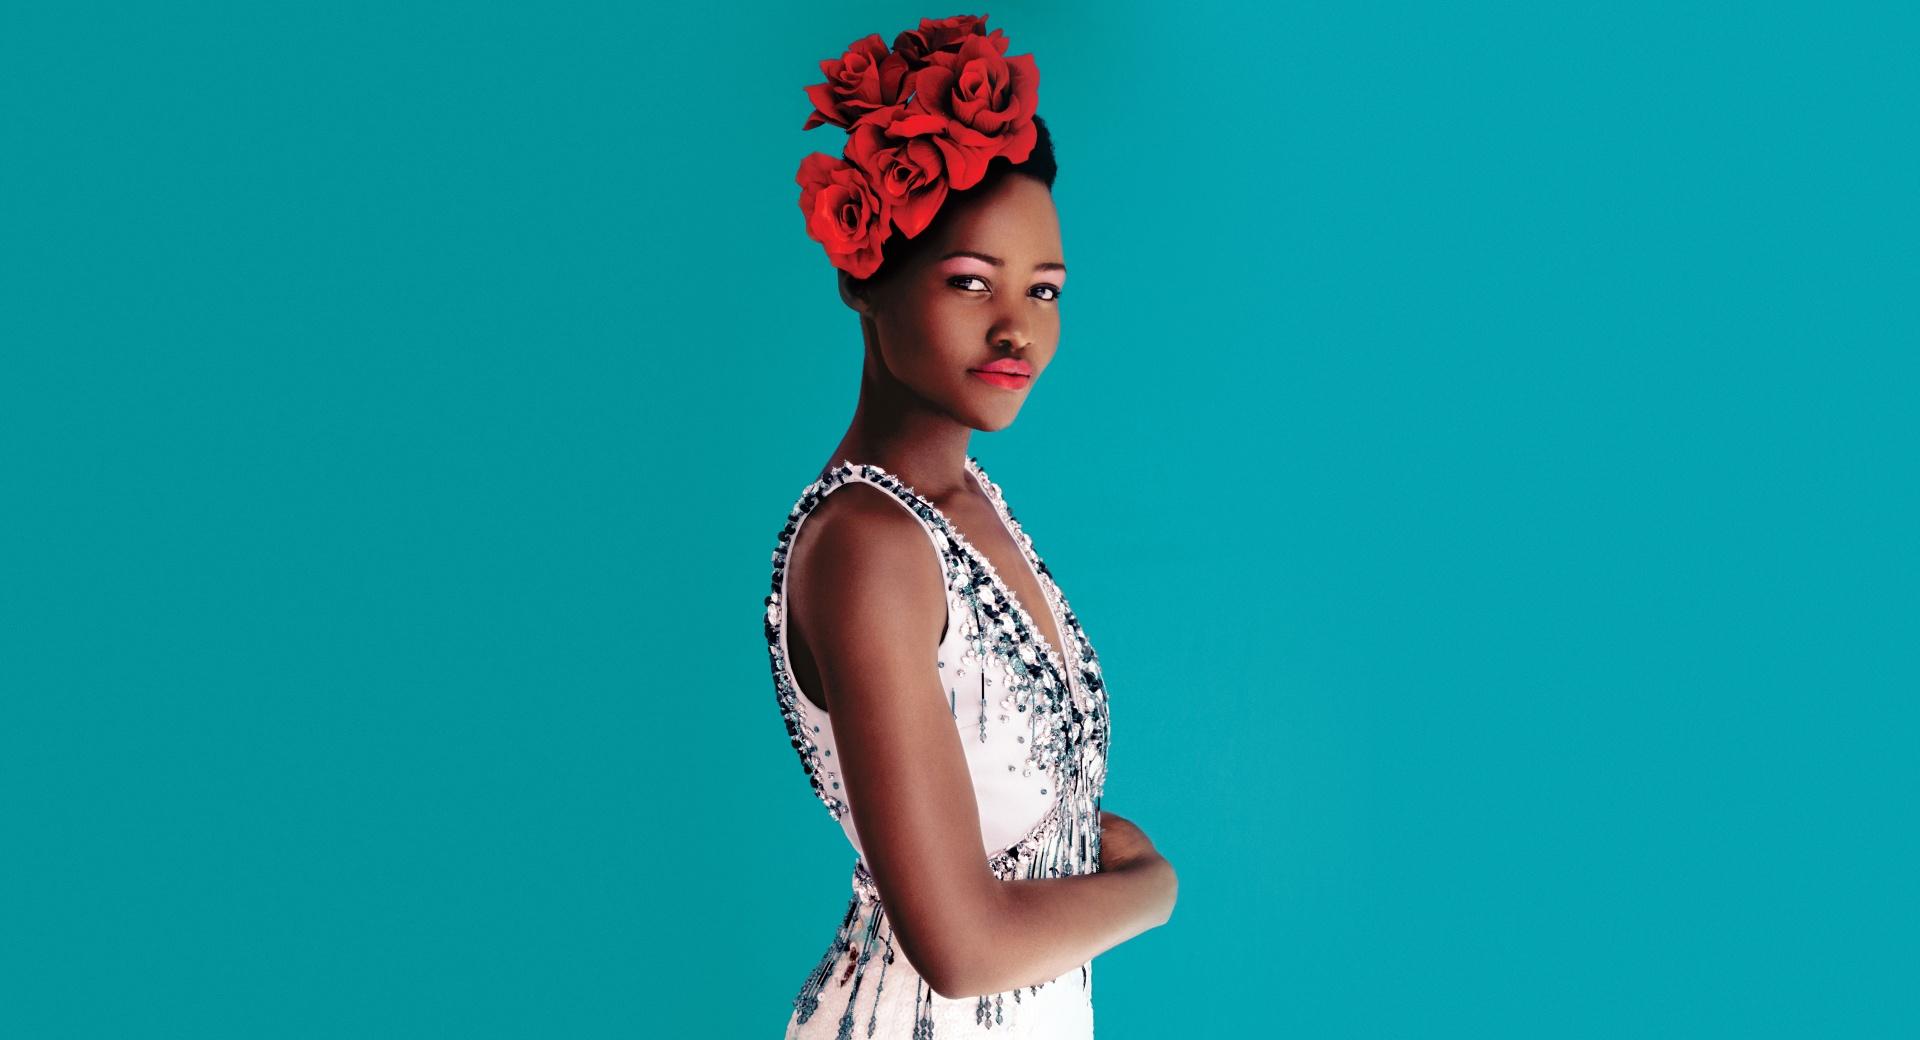 Lupita Nyongo Dress at 640 x 960 iPhone 4 size wallpapers HD quality